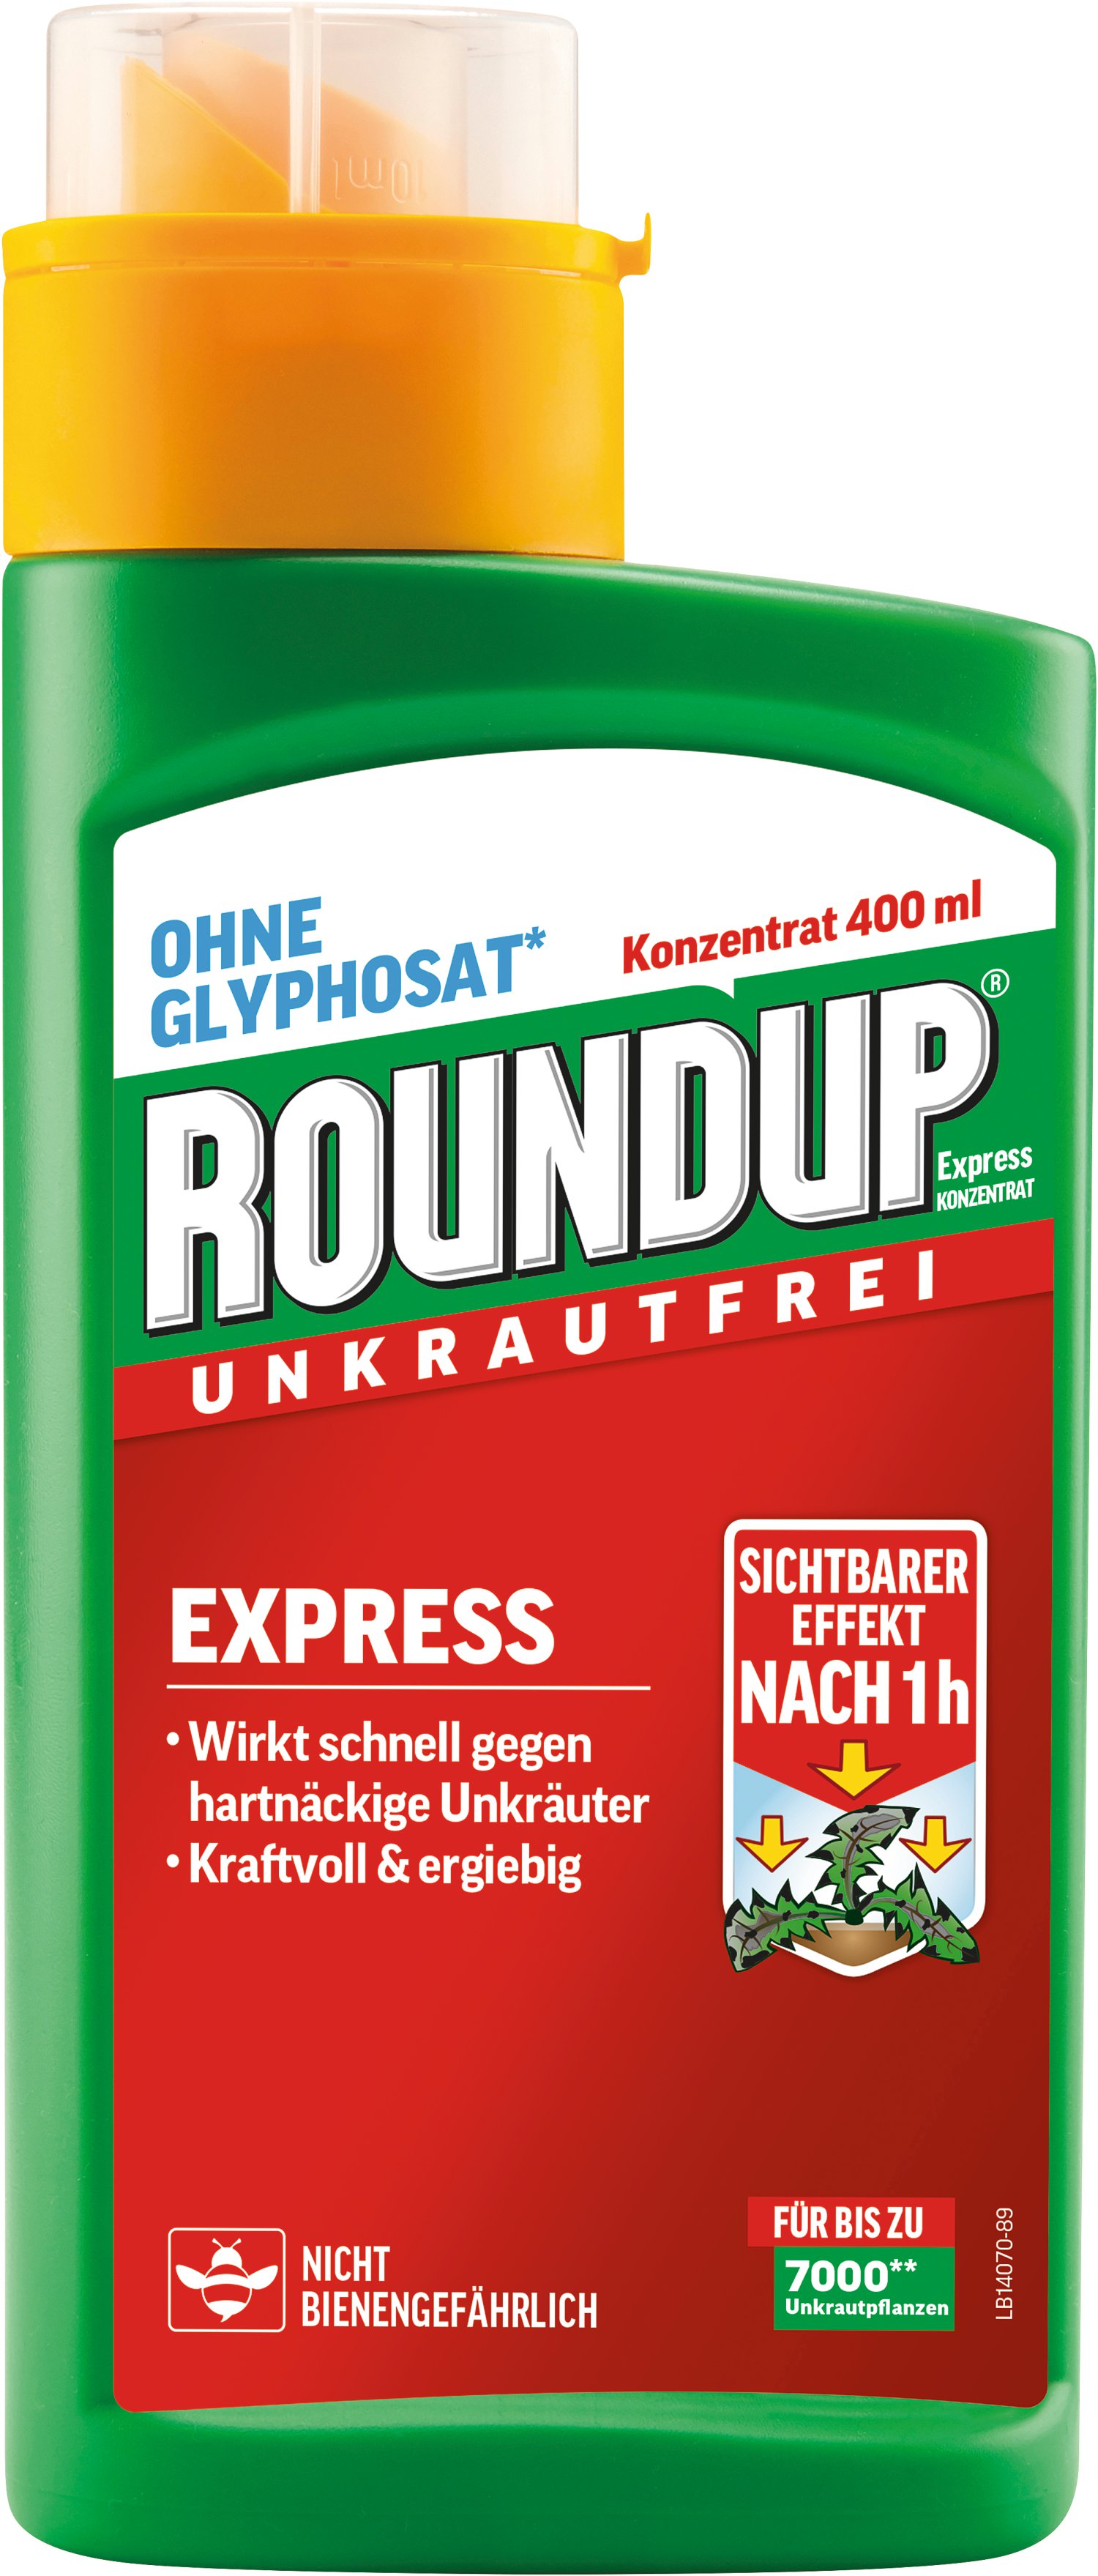 Roundup® Unkrautfrei Express Universal Konzentrat 400 ml